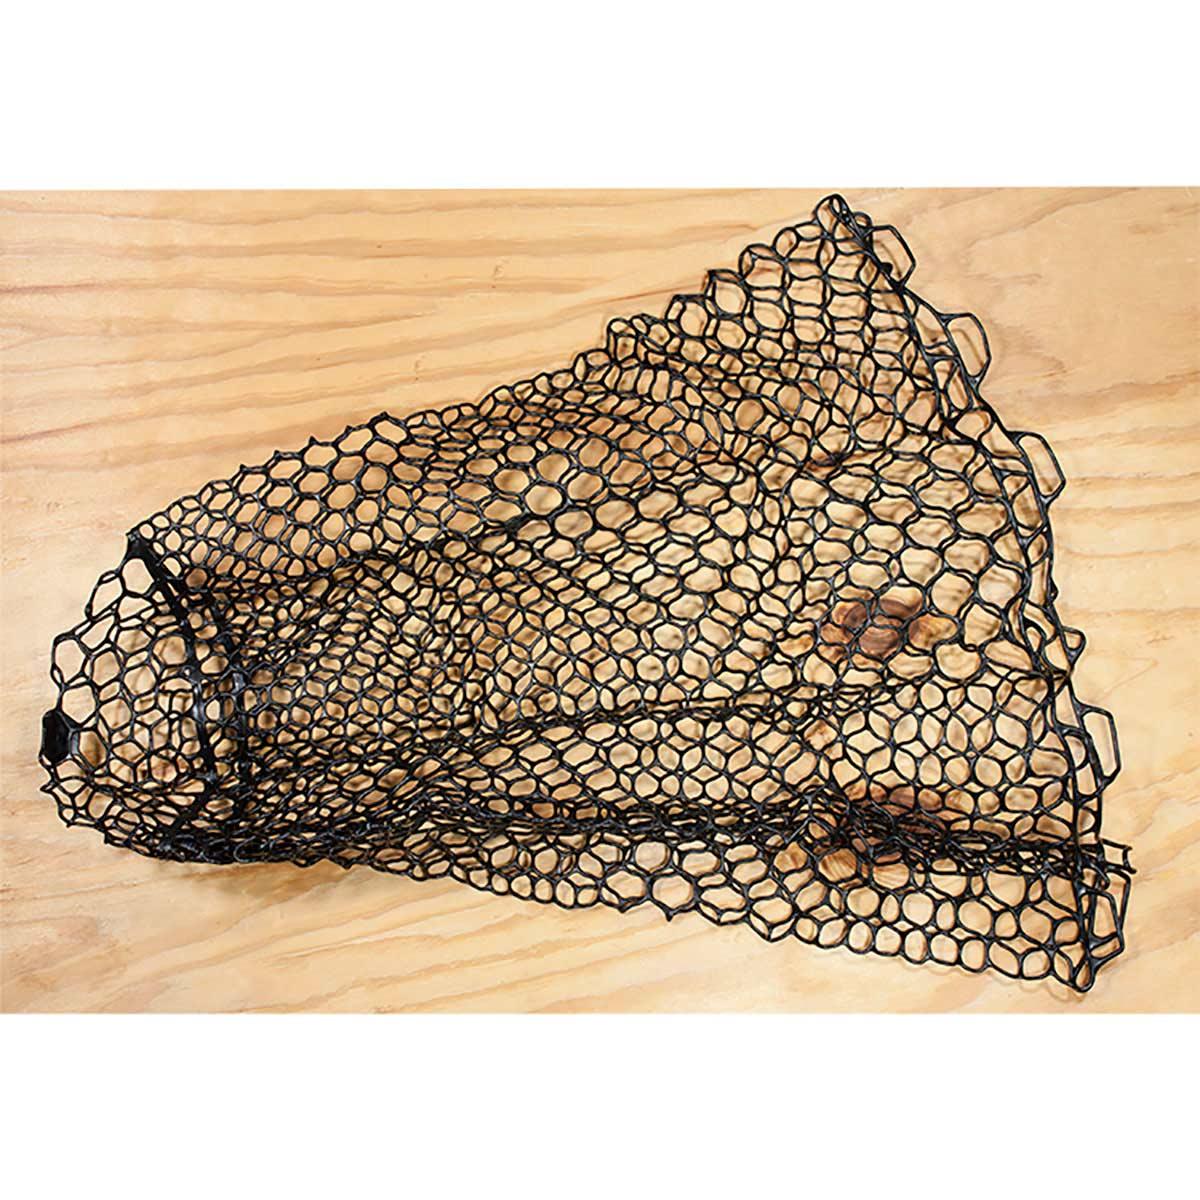  Fishing Net Replacement Netting